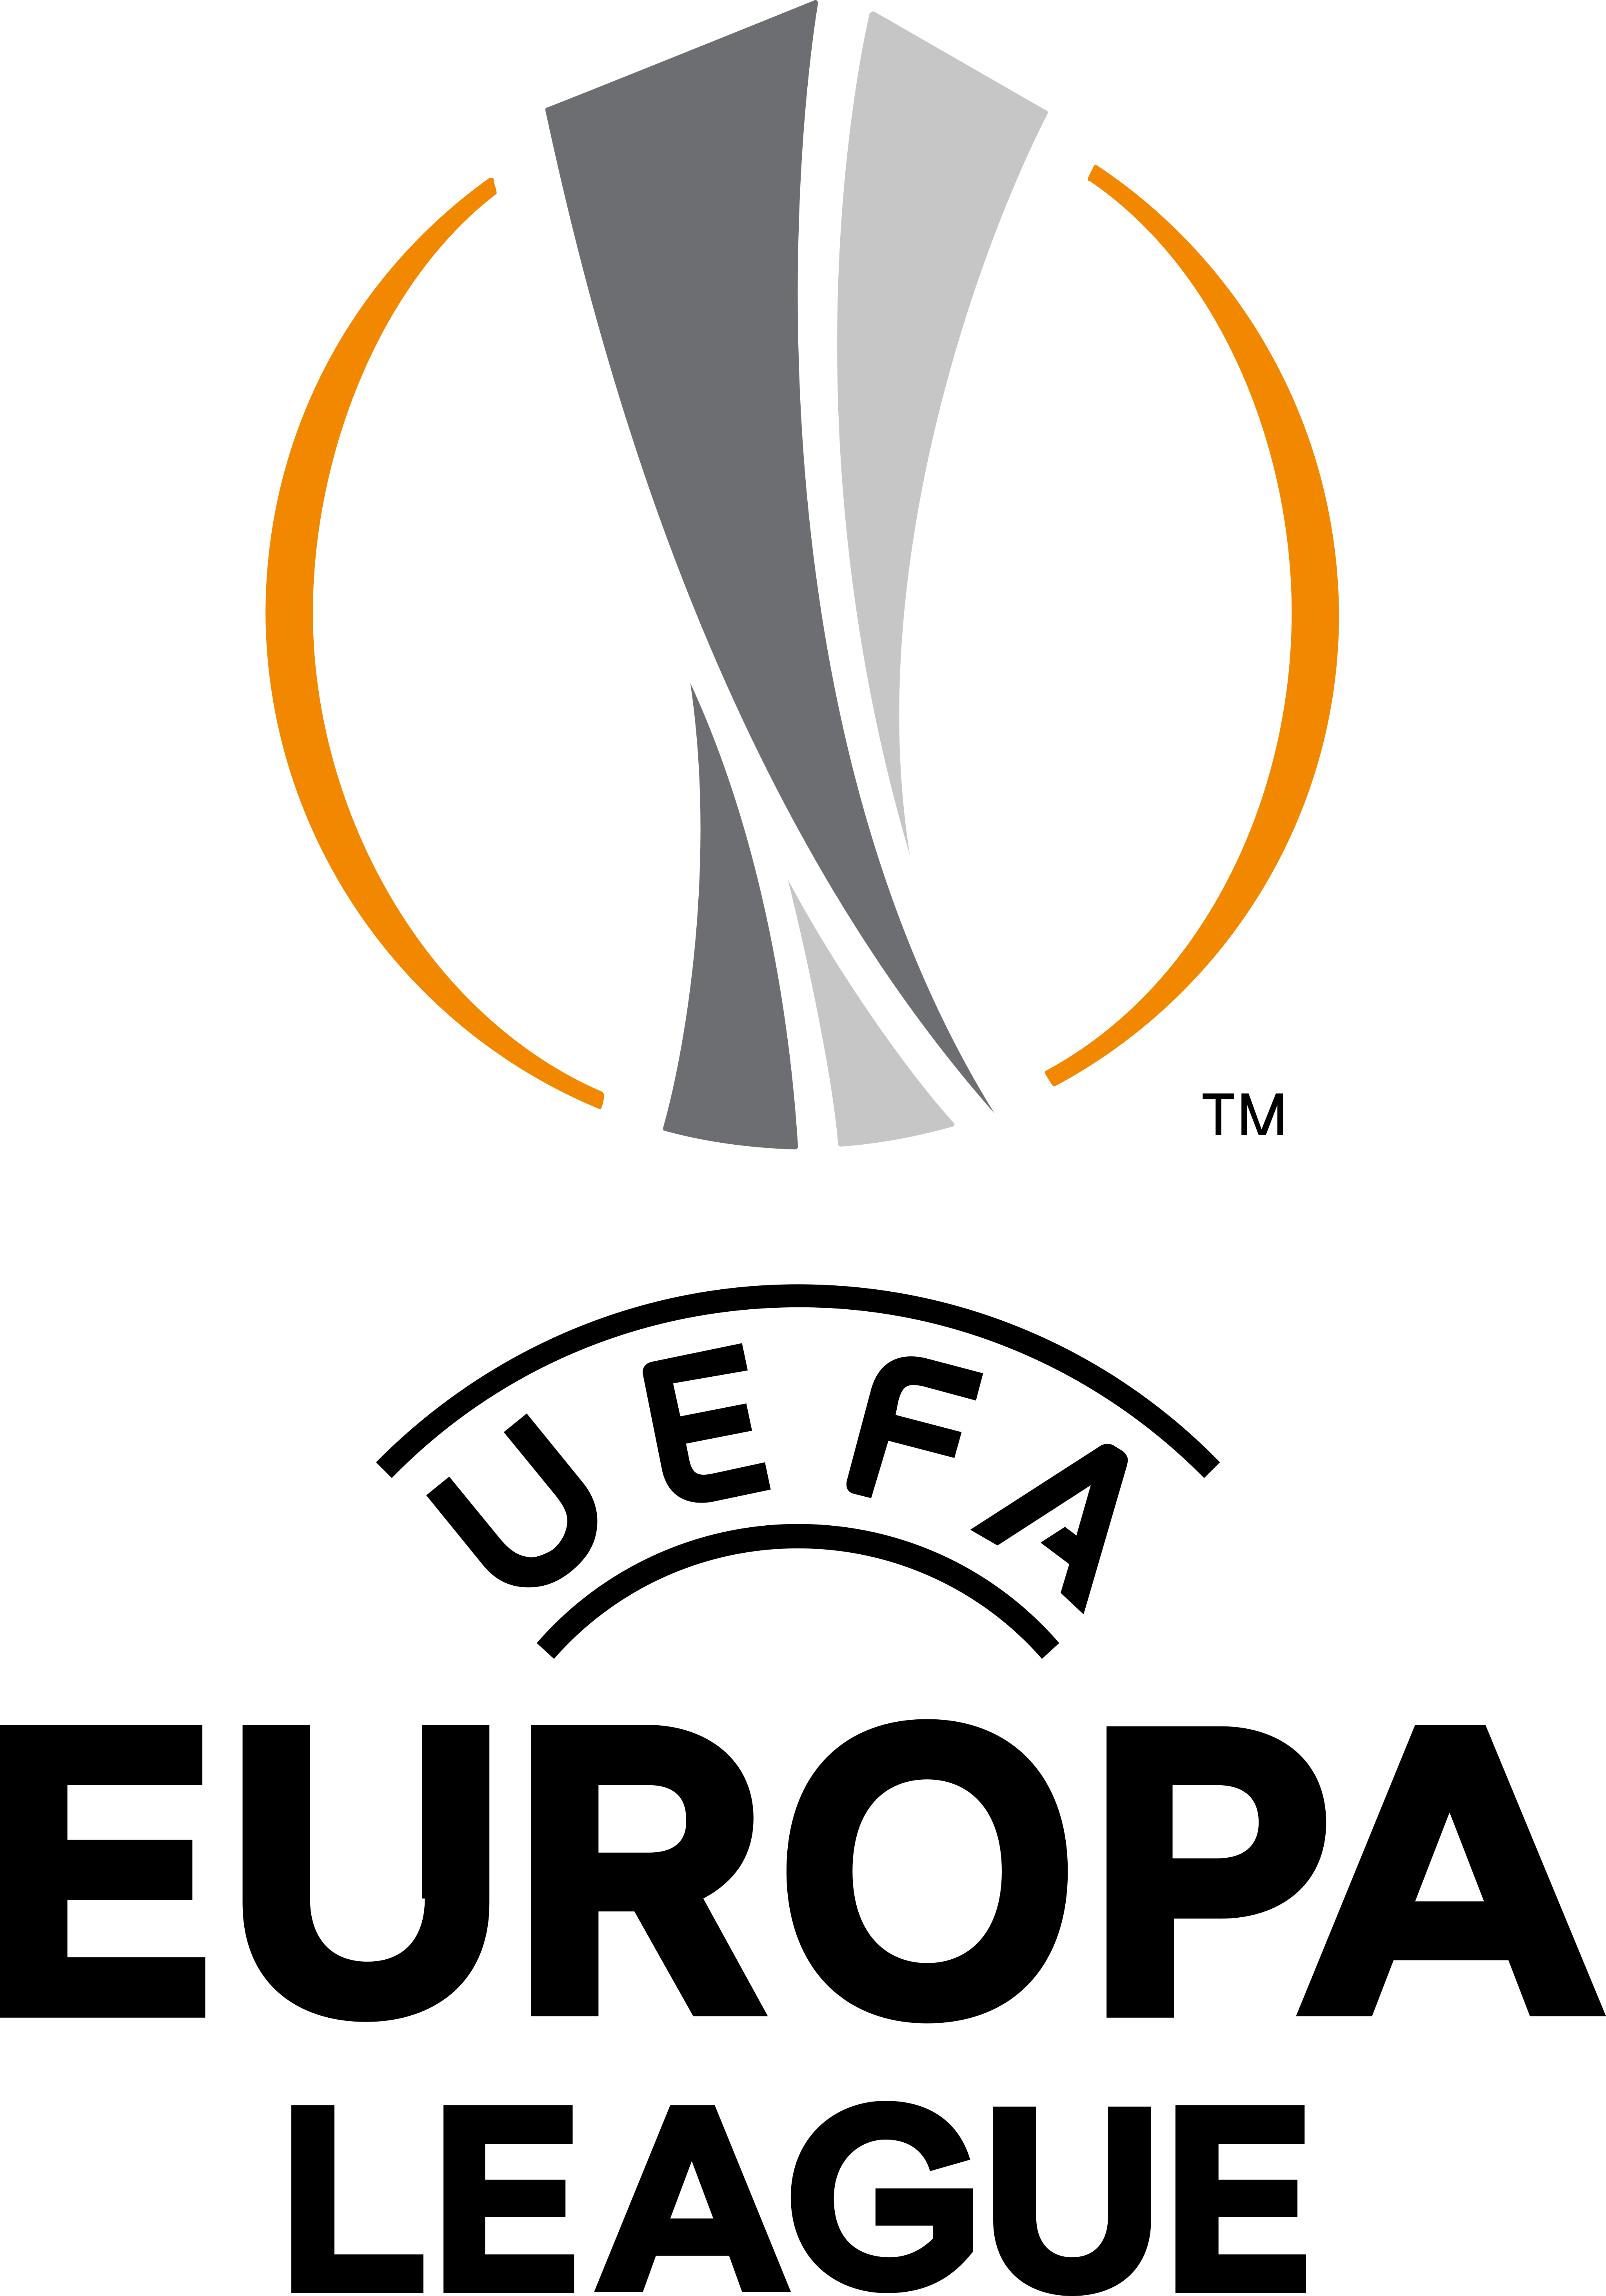 europa league logo - UEFA Europa League Logo